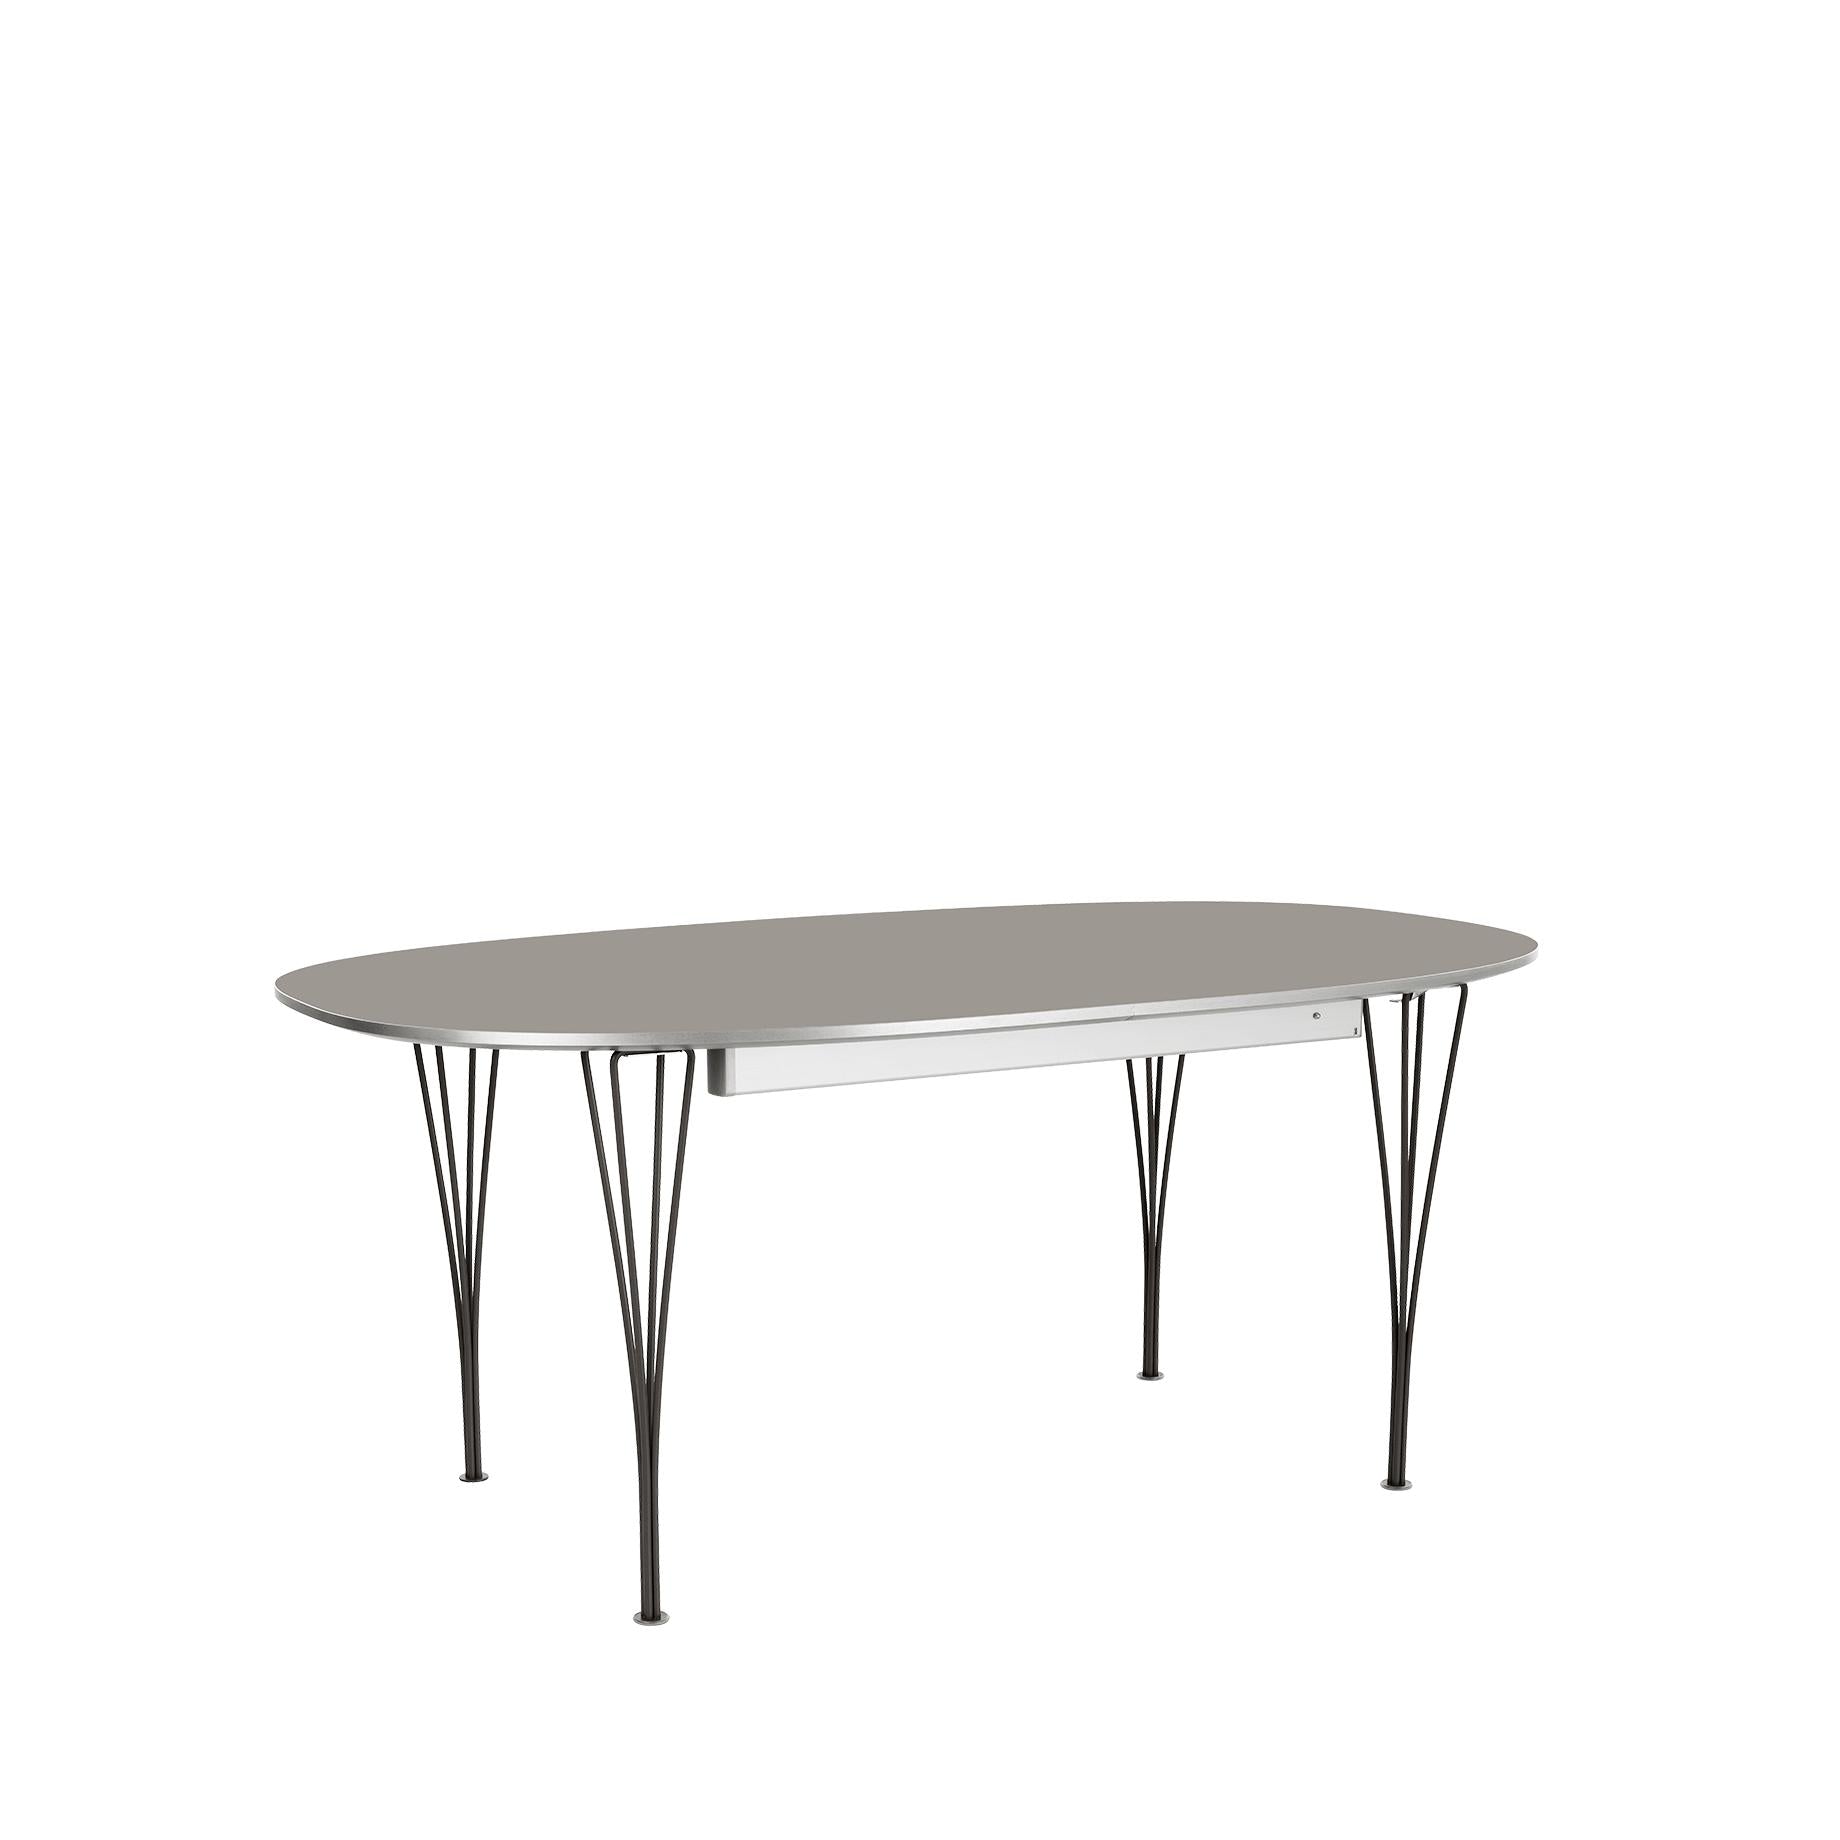 Fritz Hansen Super ellipse utdragbart bord krom 120 x180/300 cm, grå laminat